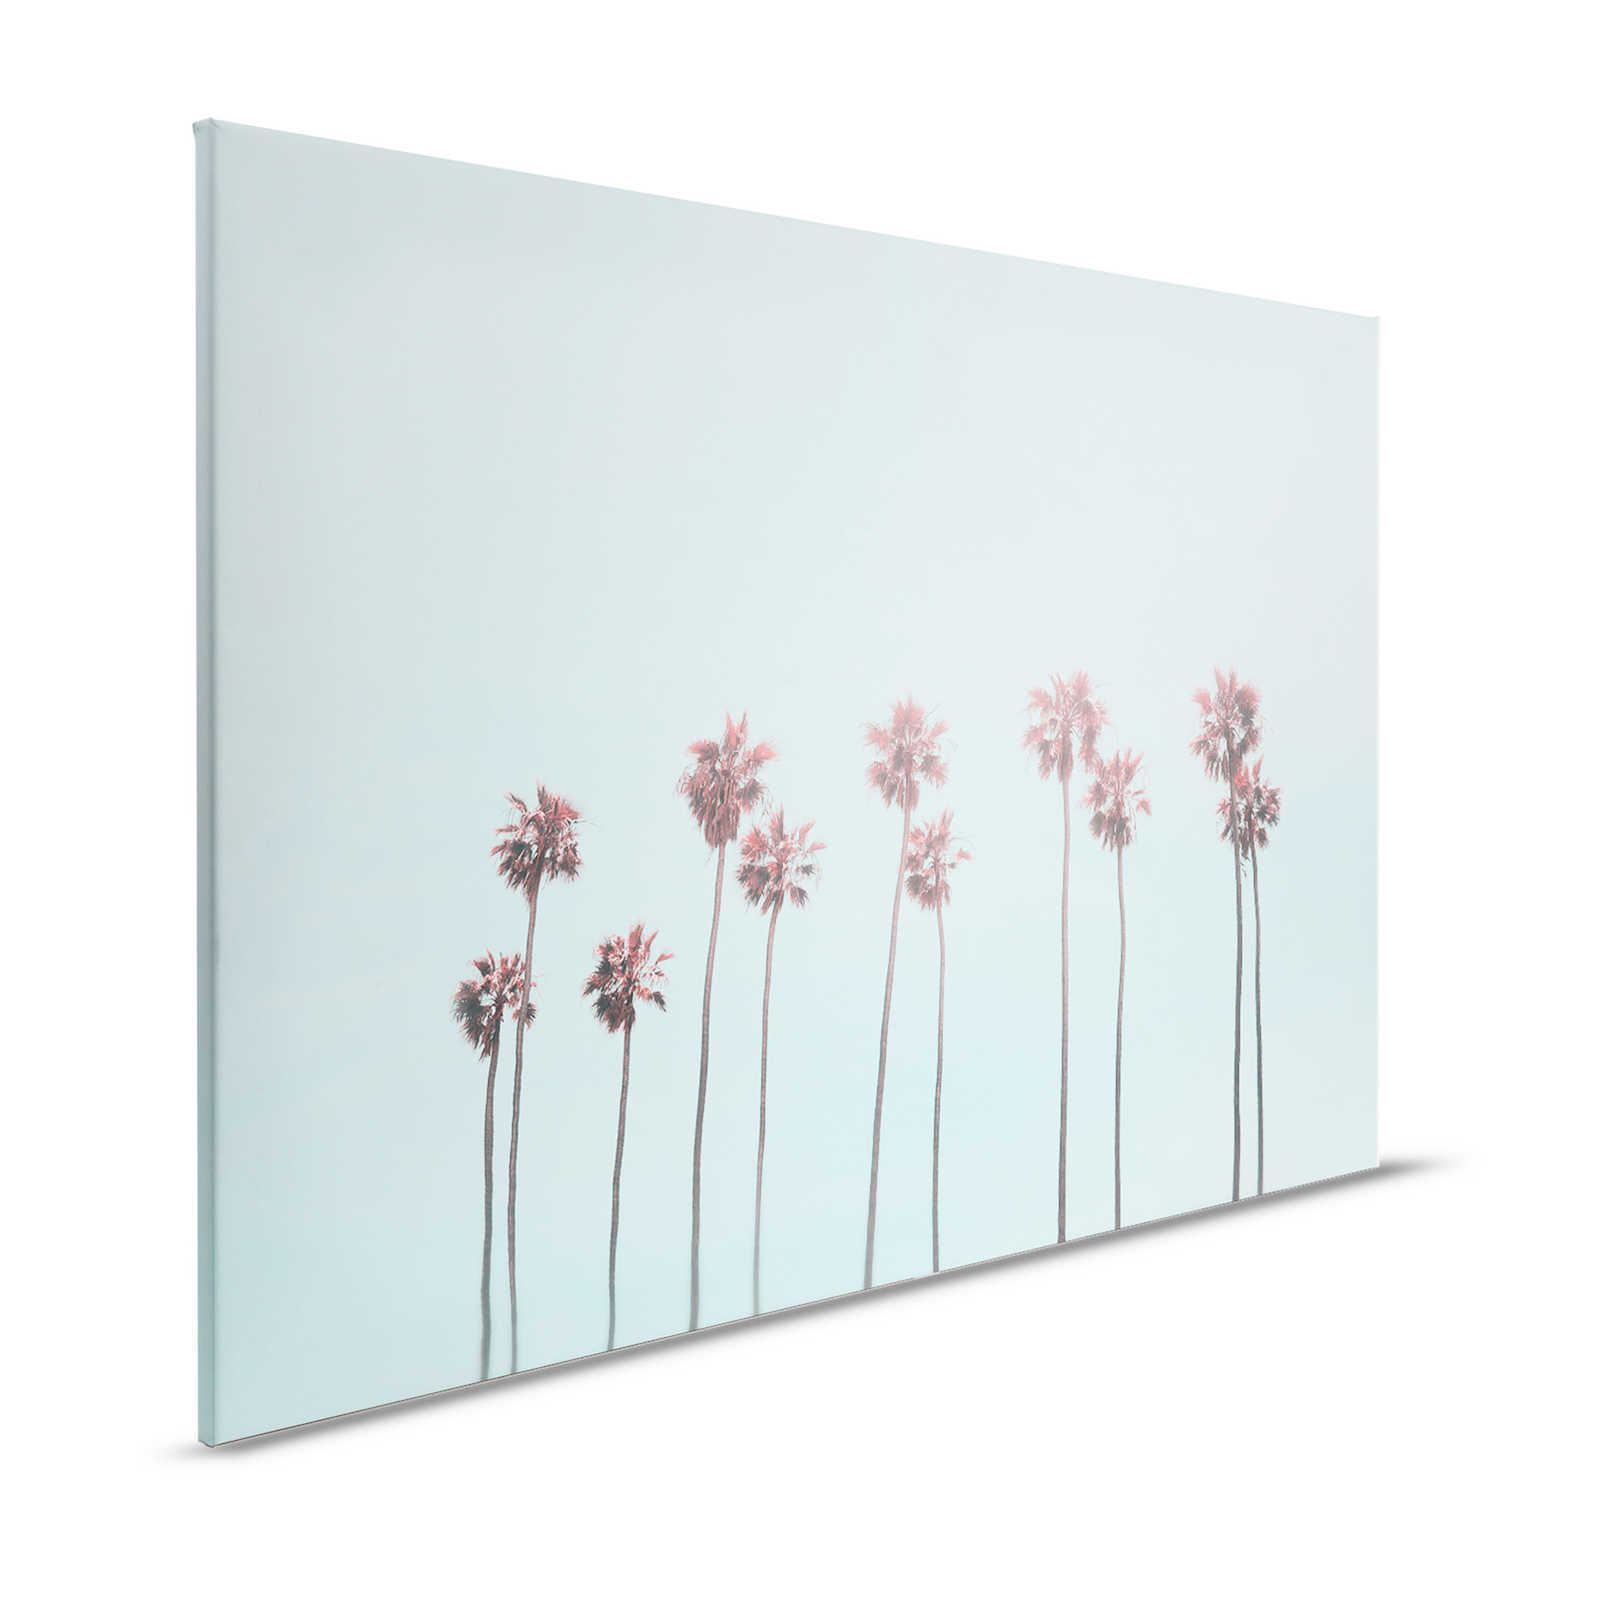 Leinwandbild Palmen & Himmel für Strandfeeling in Türkis & Pink – 1,20 m x 0,80 m
